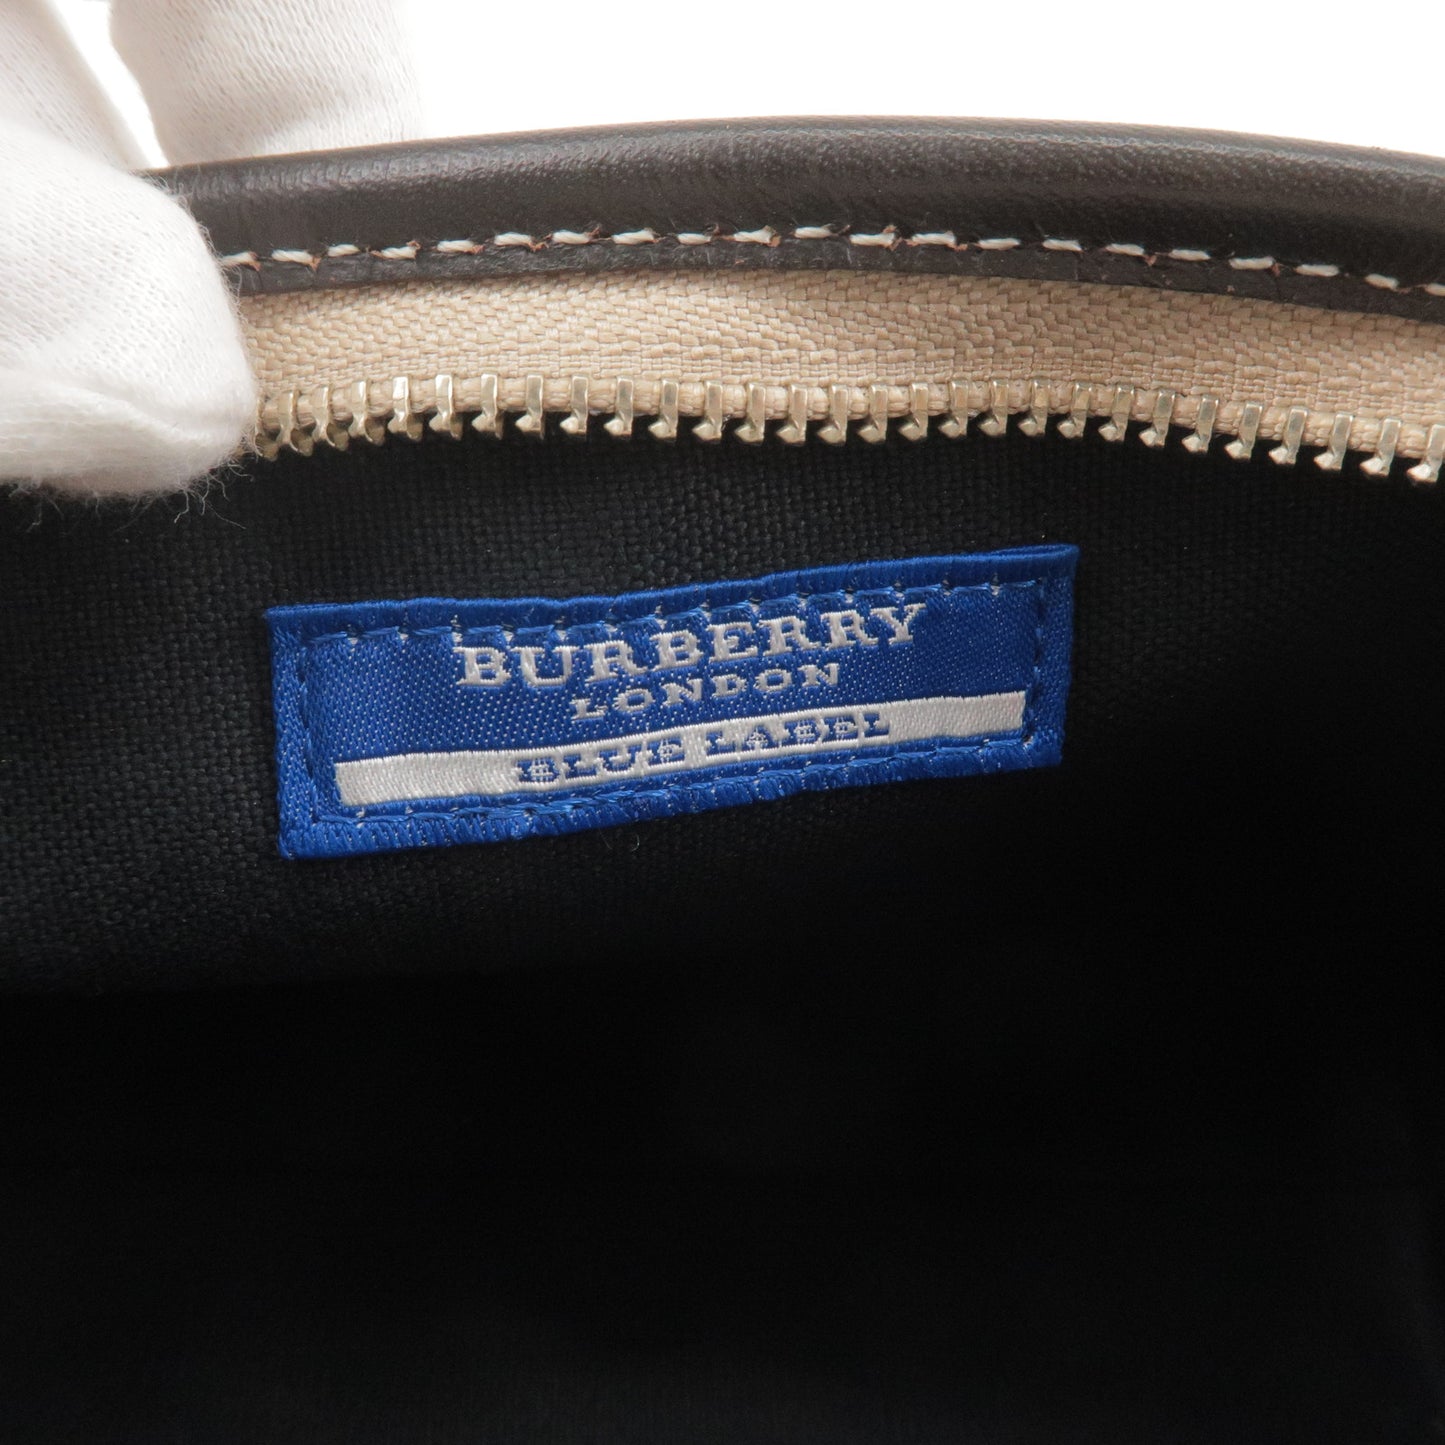 BURBERRY Blue Label Canvas Leather Shoulder Bag Plaid Beige